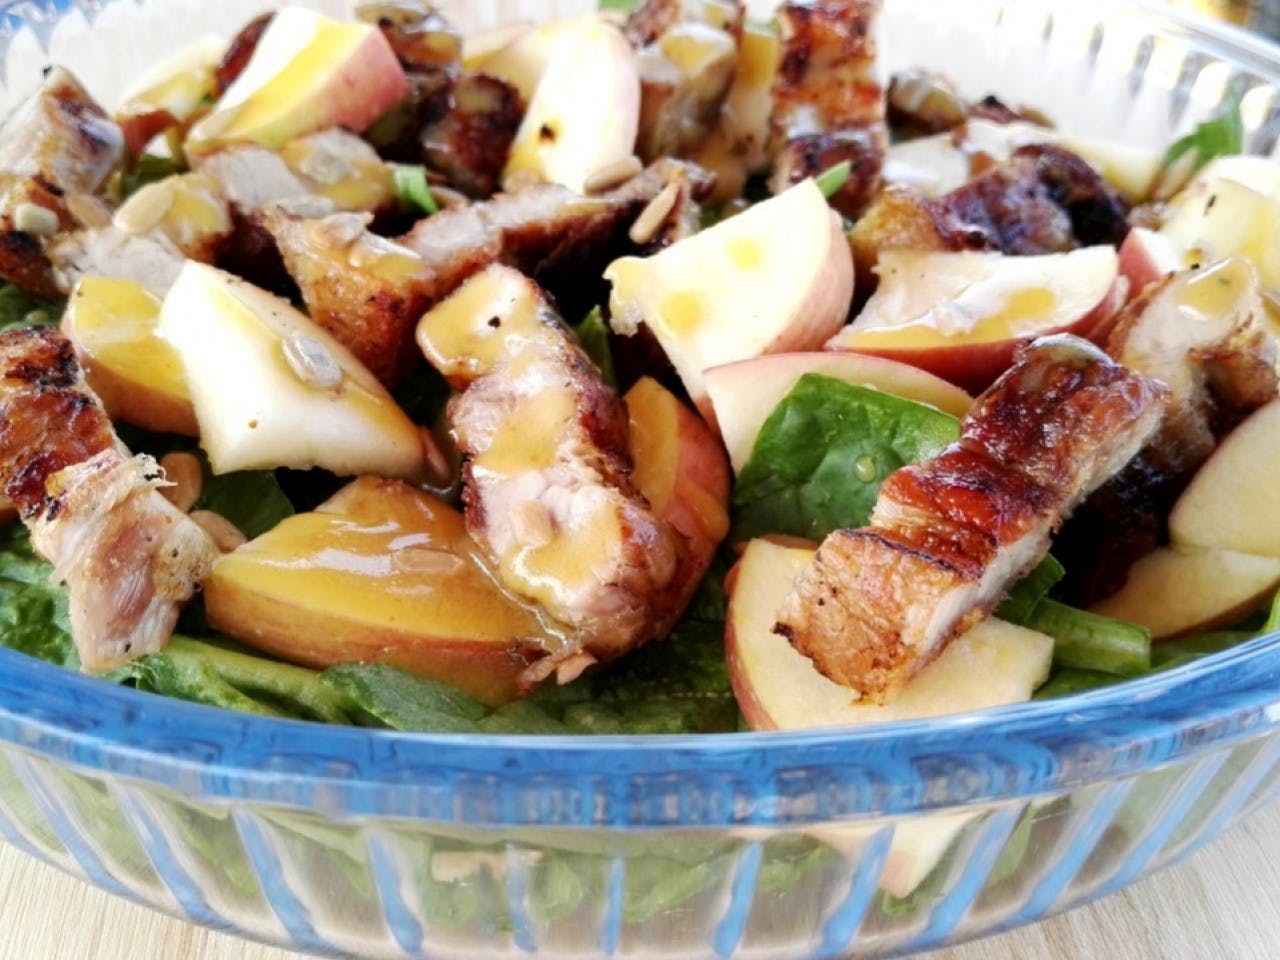 Spinach salad with apple & crispy bacon